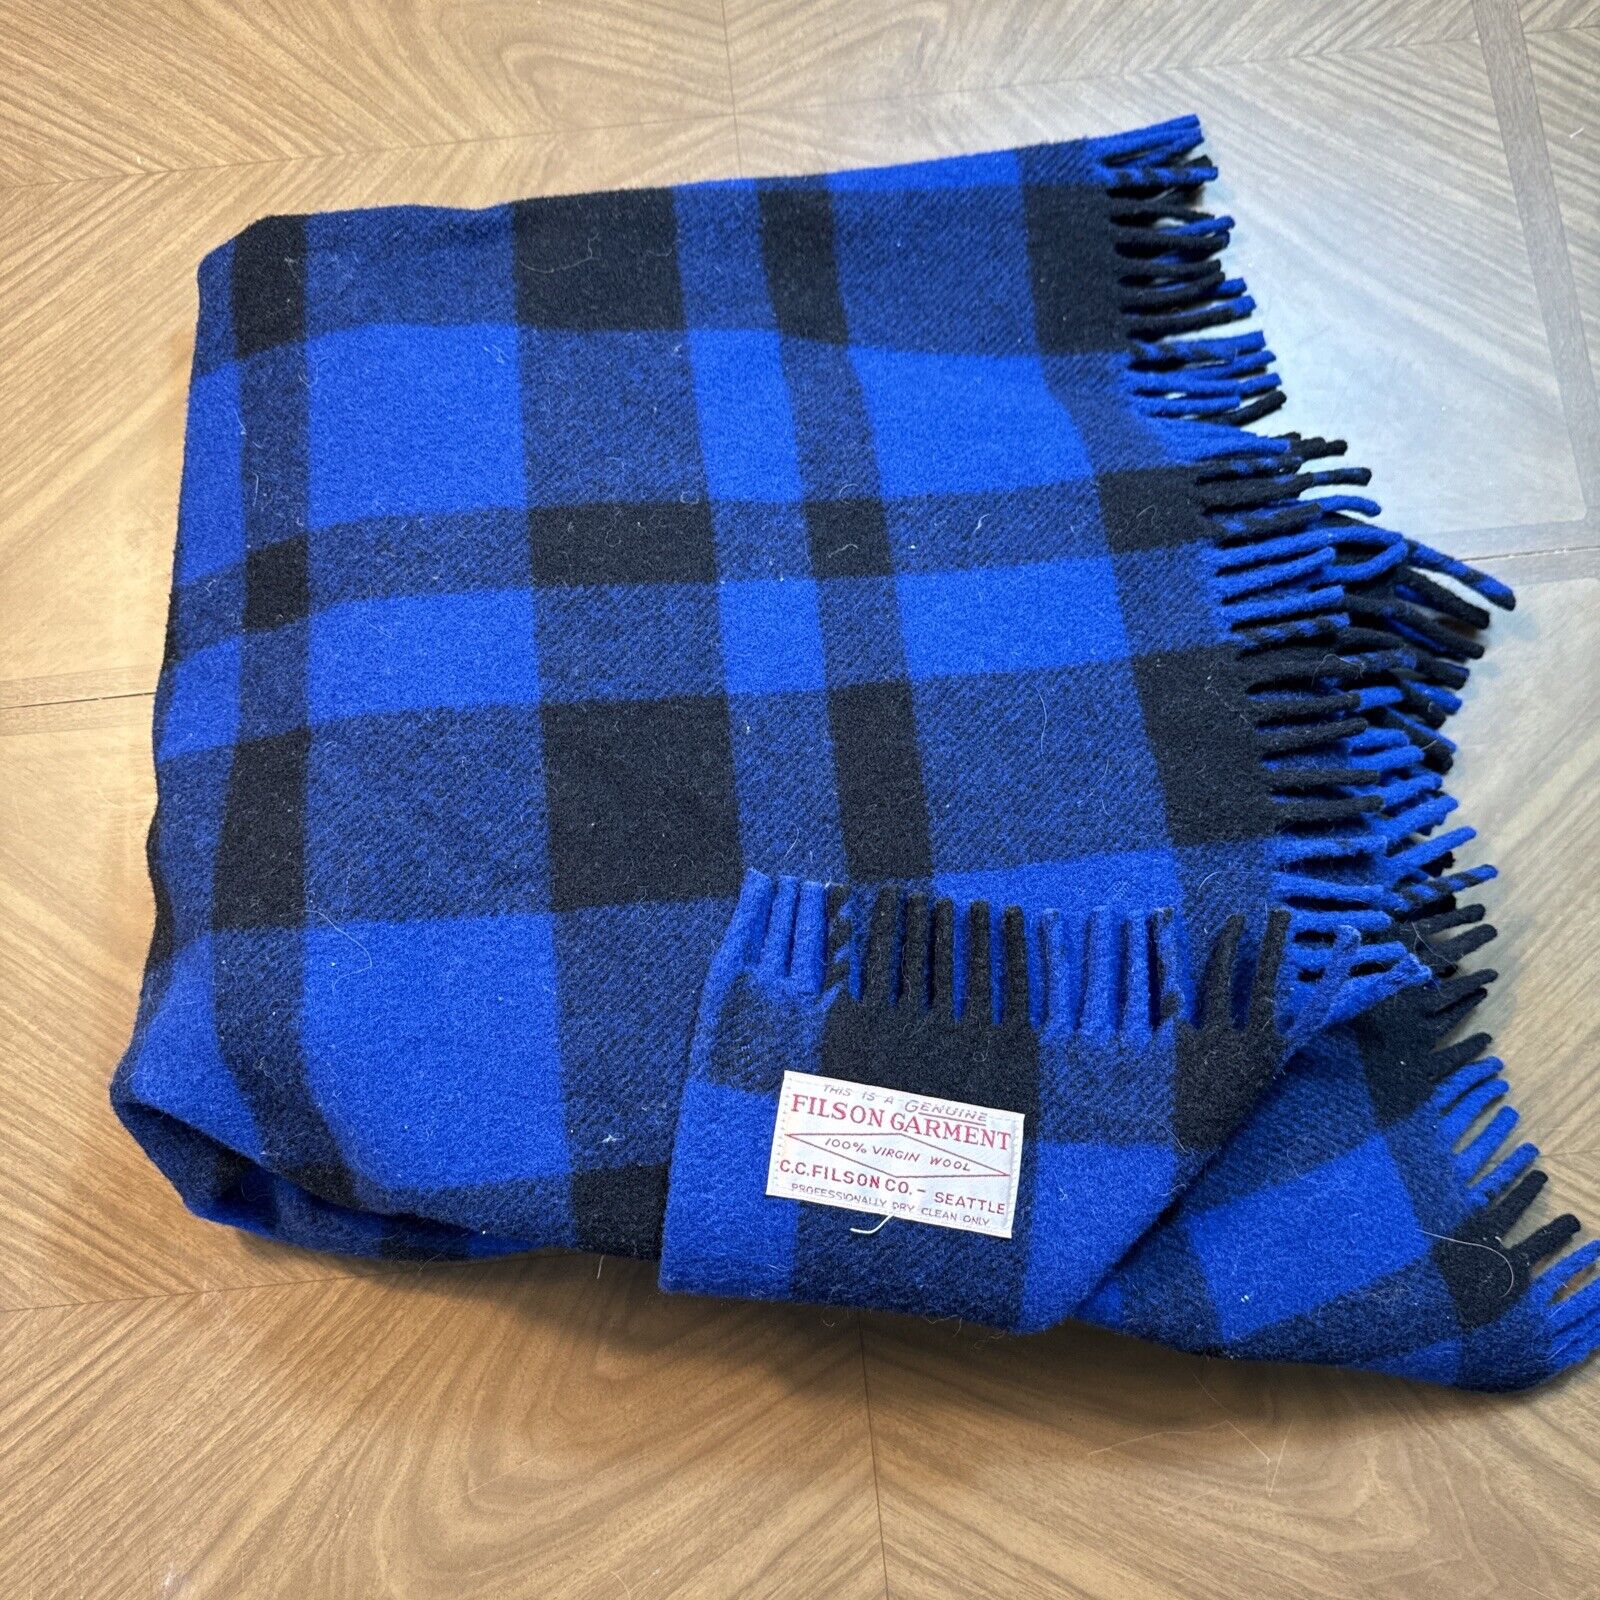 Filson Garment Vintage Mackinaw Adventure Wool Cobalt Blue/Black Blanket